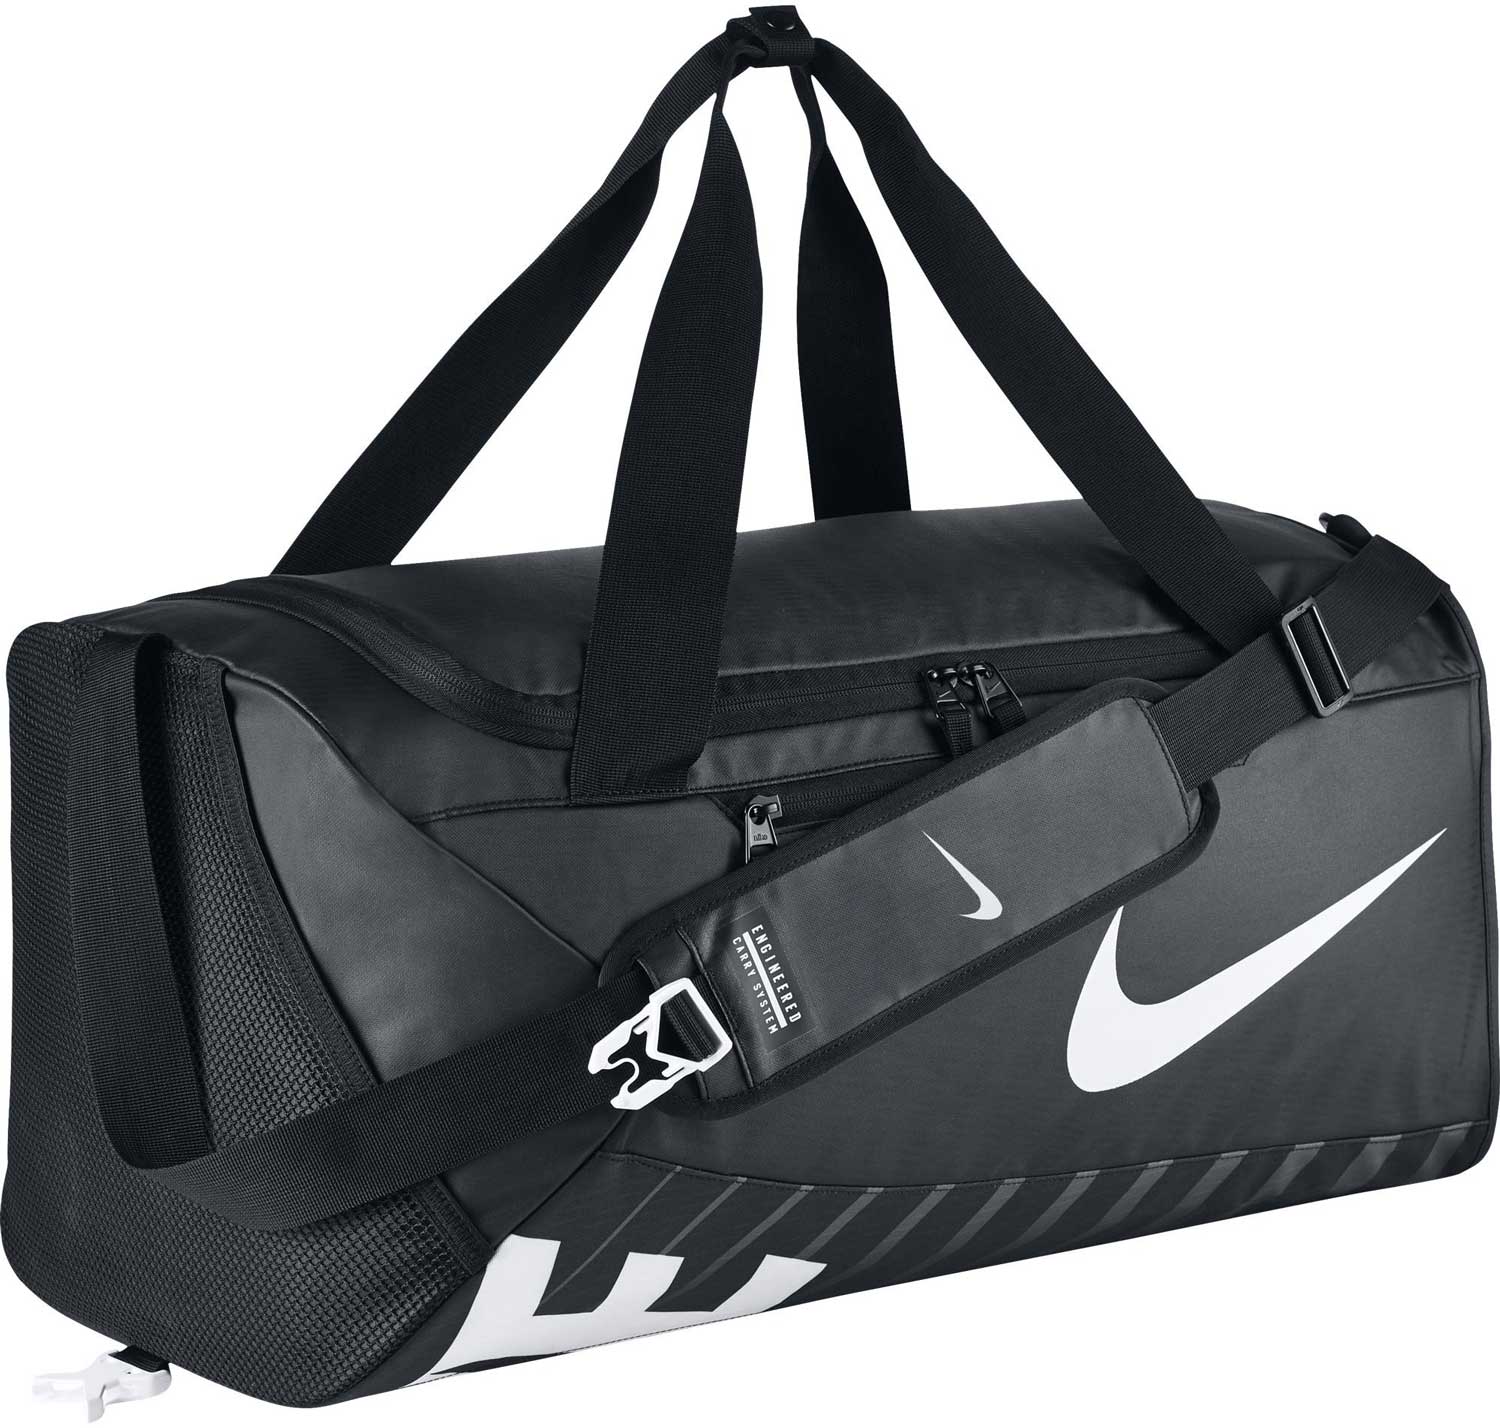 ALPHA ADAPT MEDIUM - Sporty bag